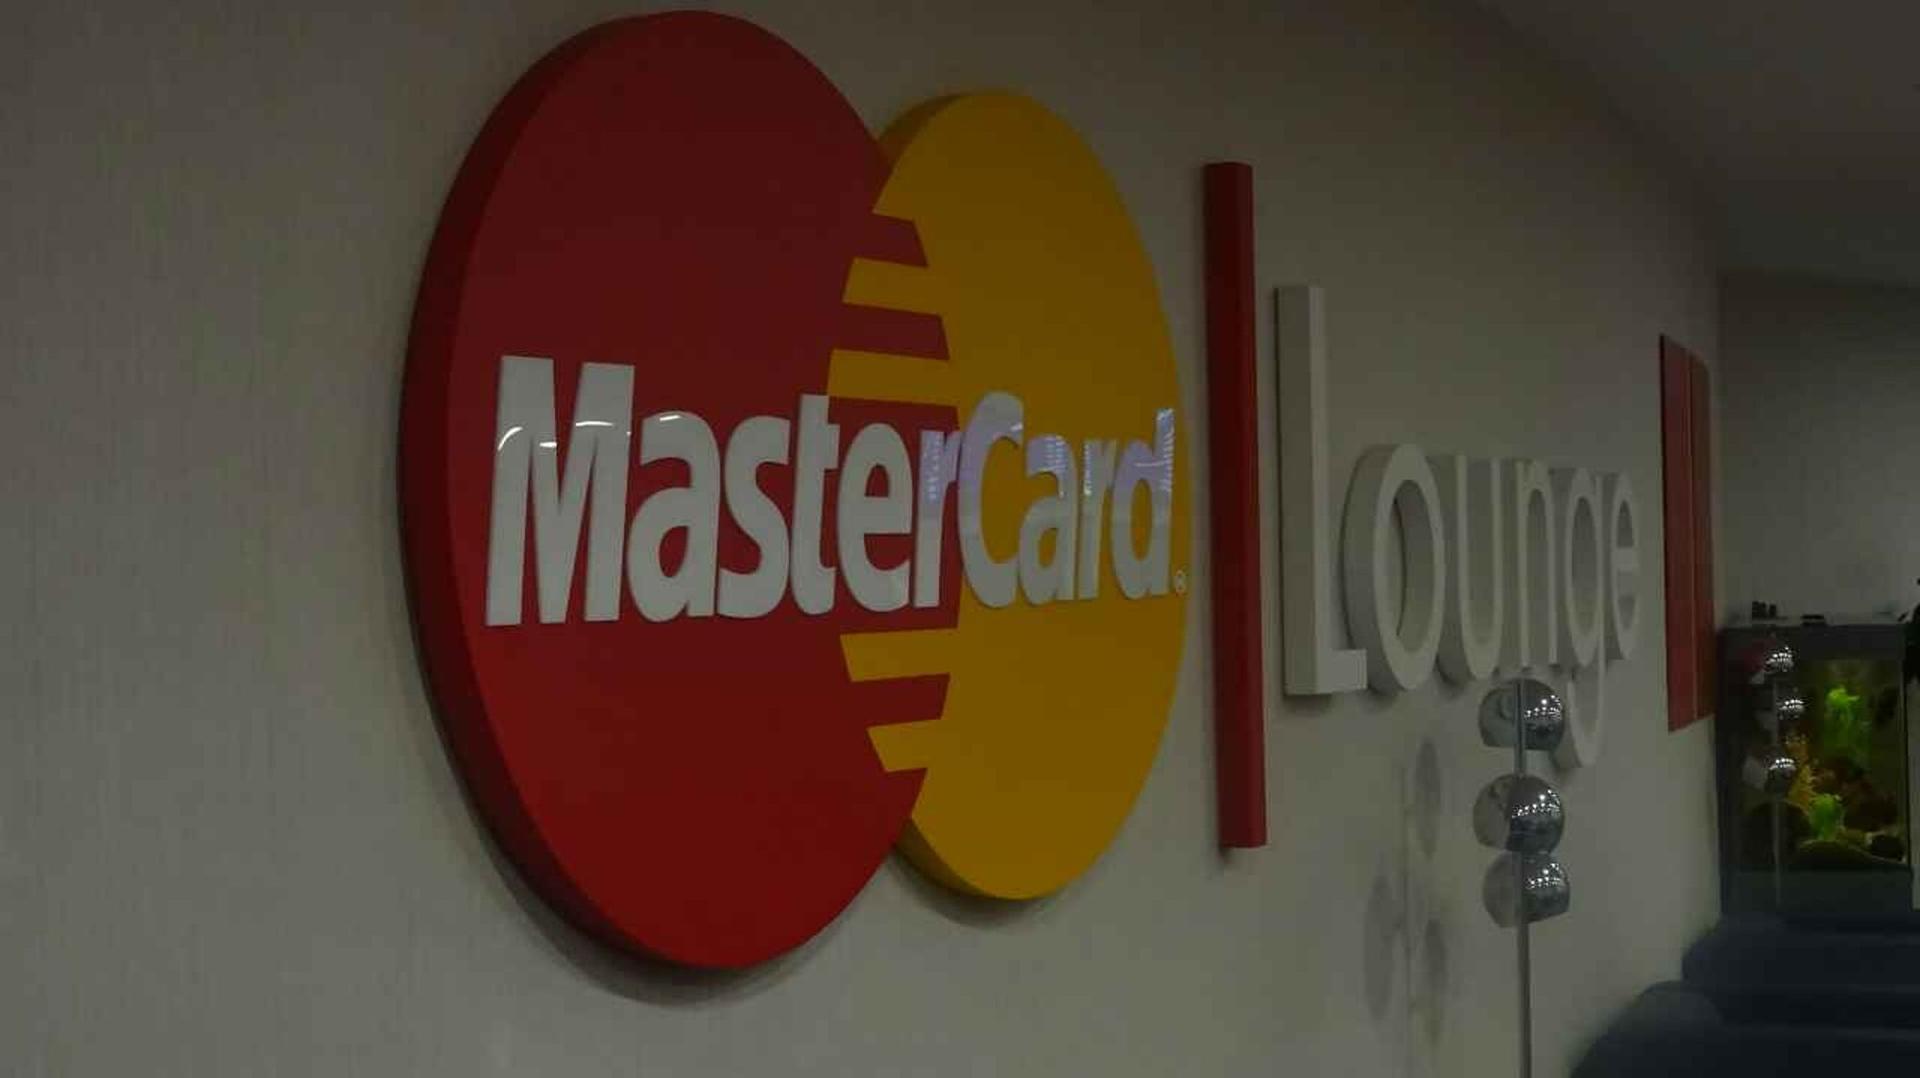 Mastercard Business Lounge image 14 of 36